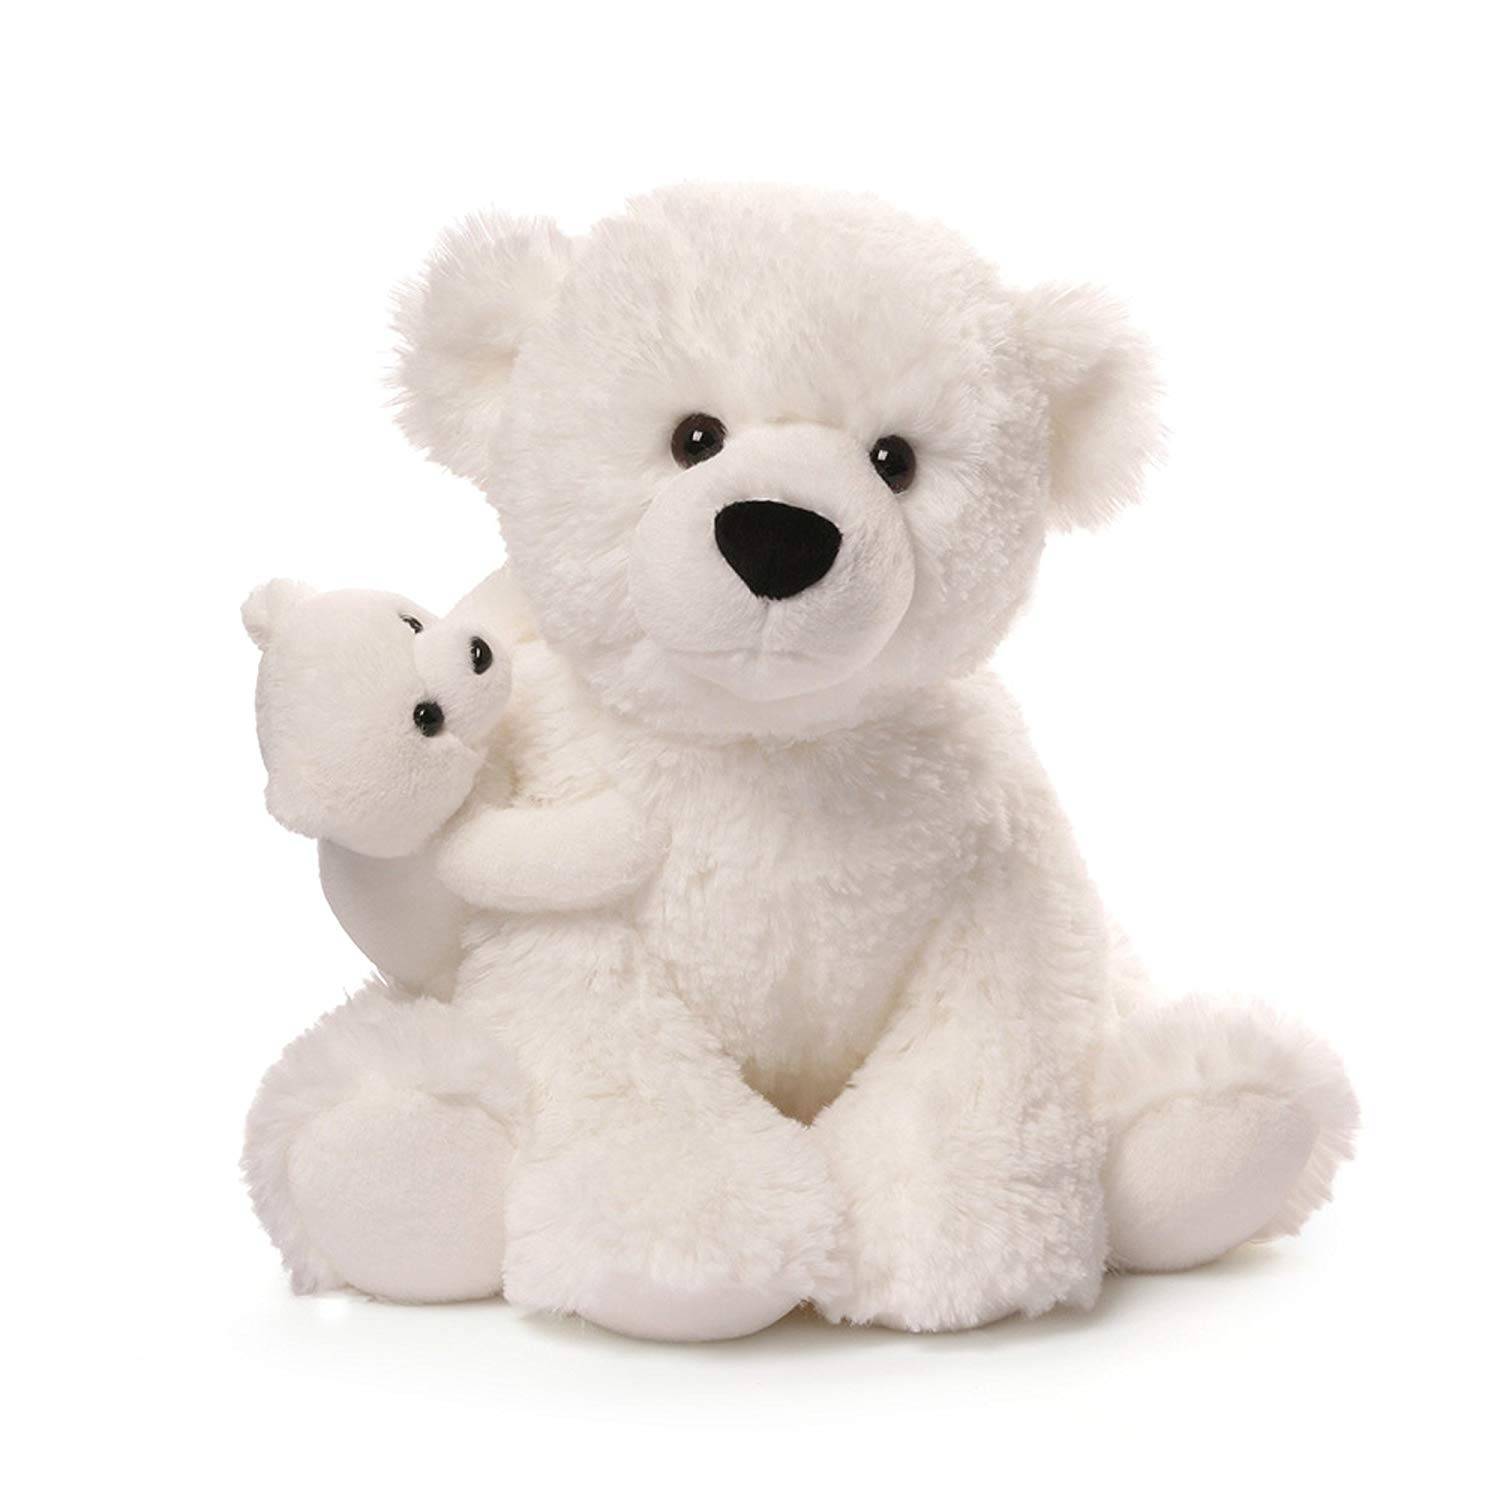 produce mother and kid design cute animal soft stuffed panda plush toy